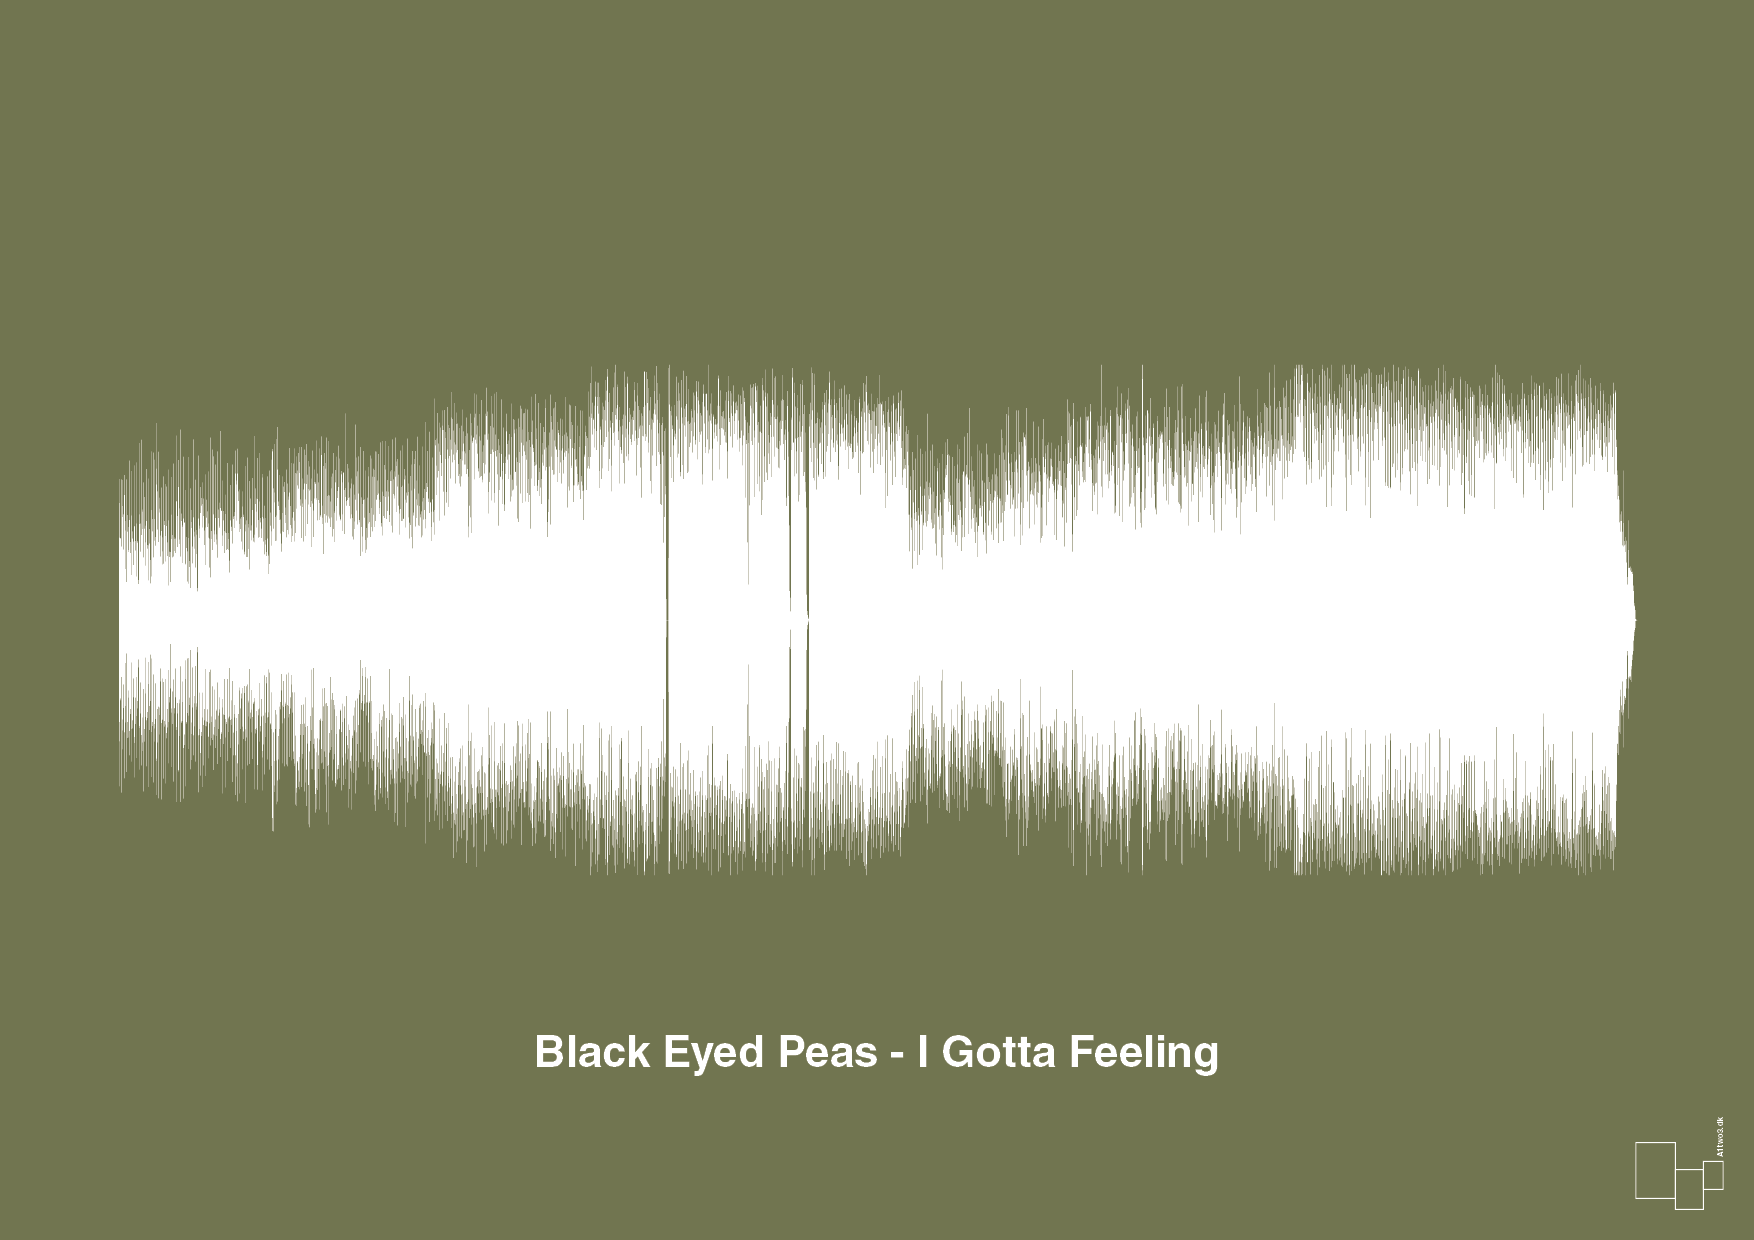 black eyed peas - i gotta feeling - Plakat med Musik i Secret Meadow